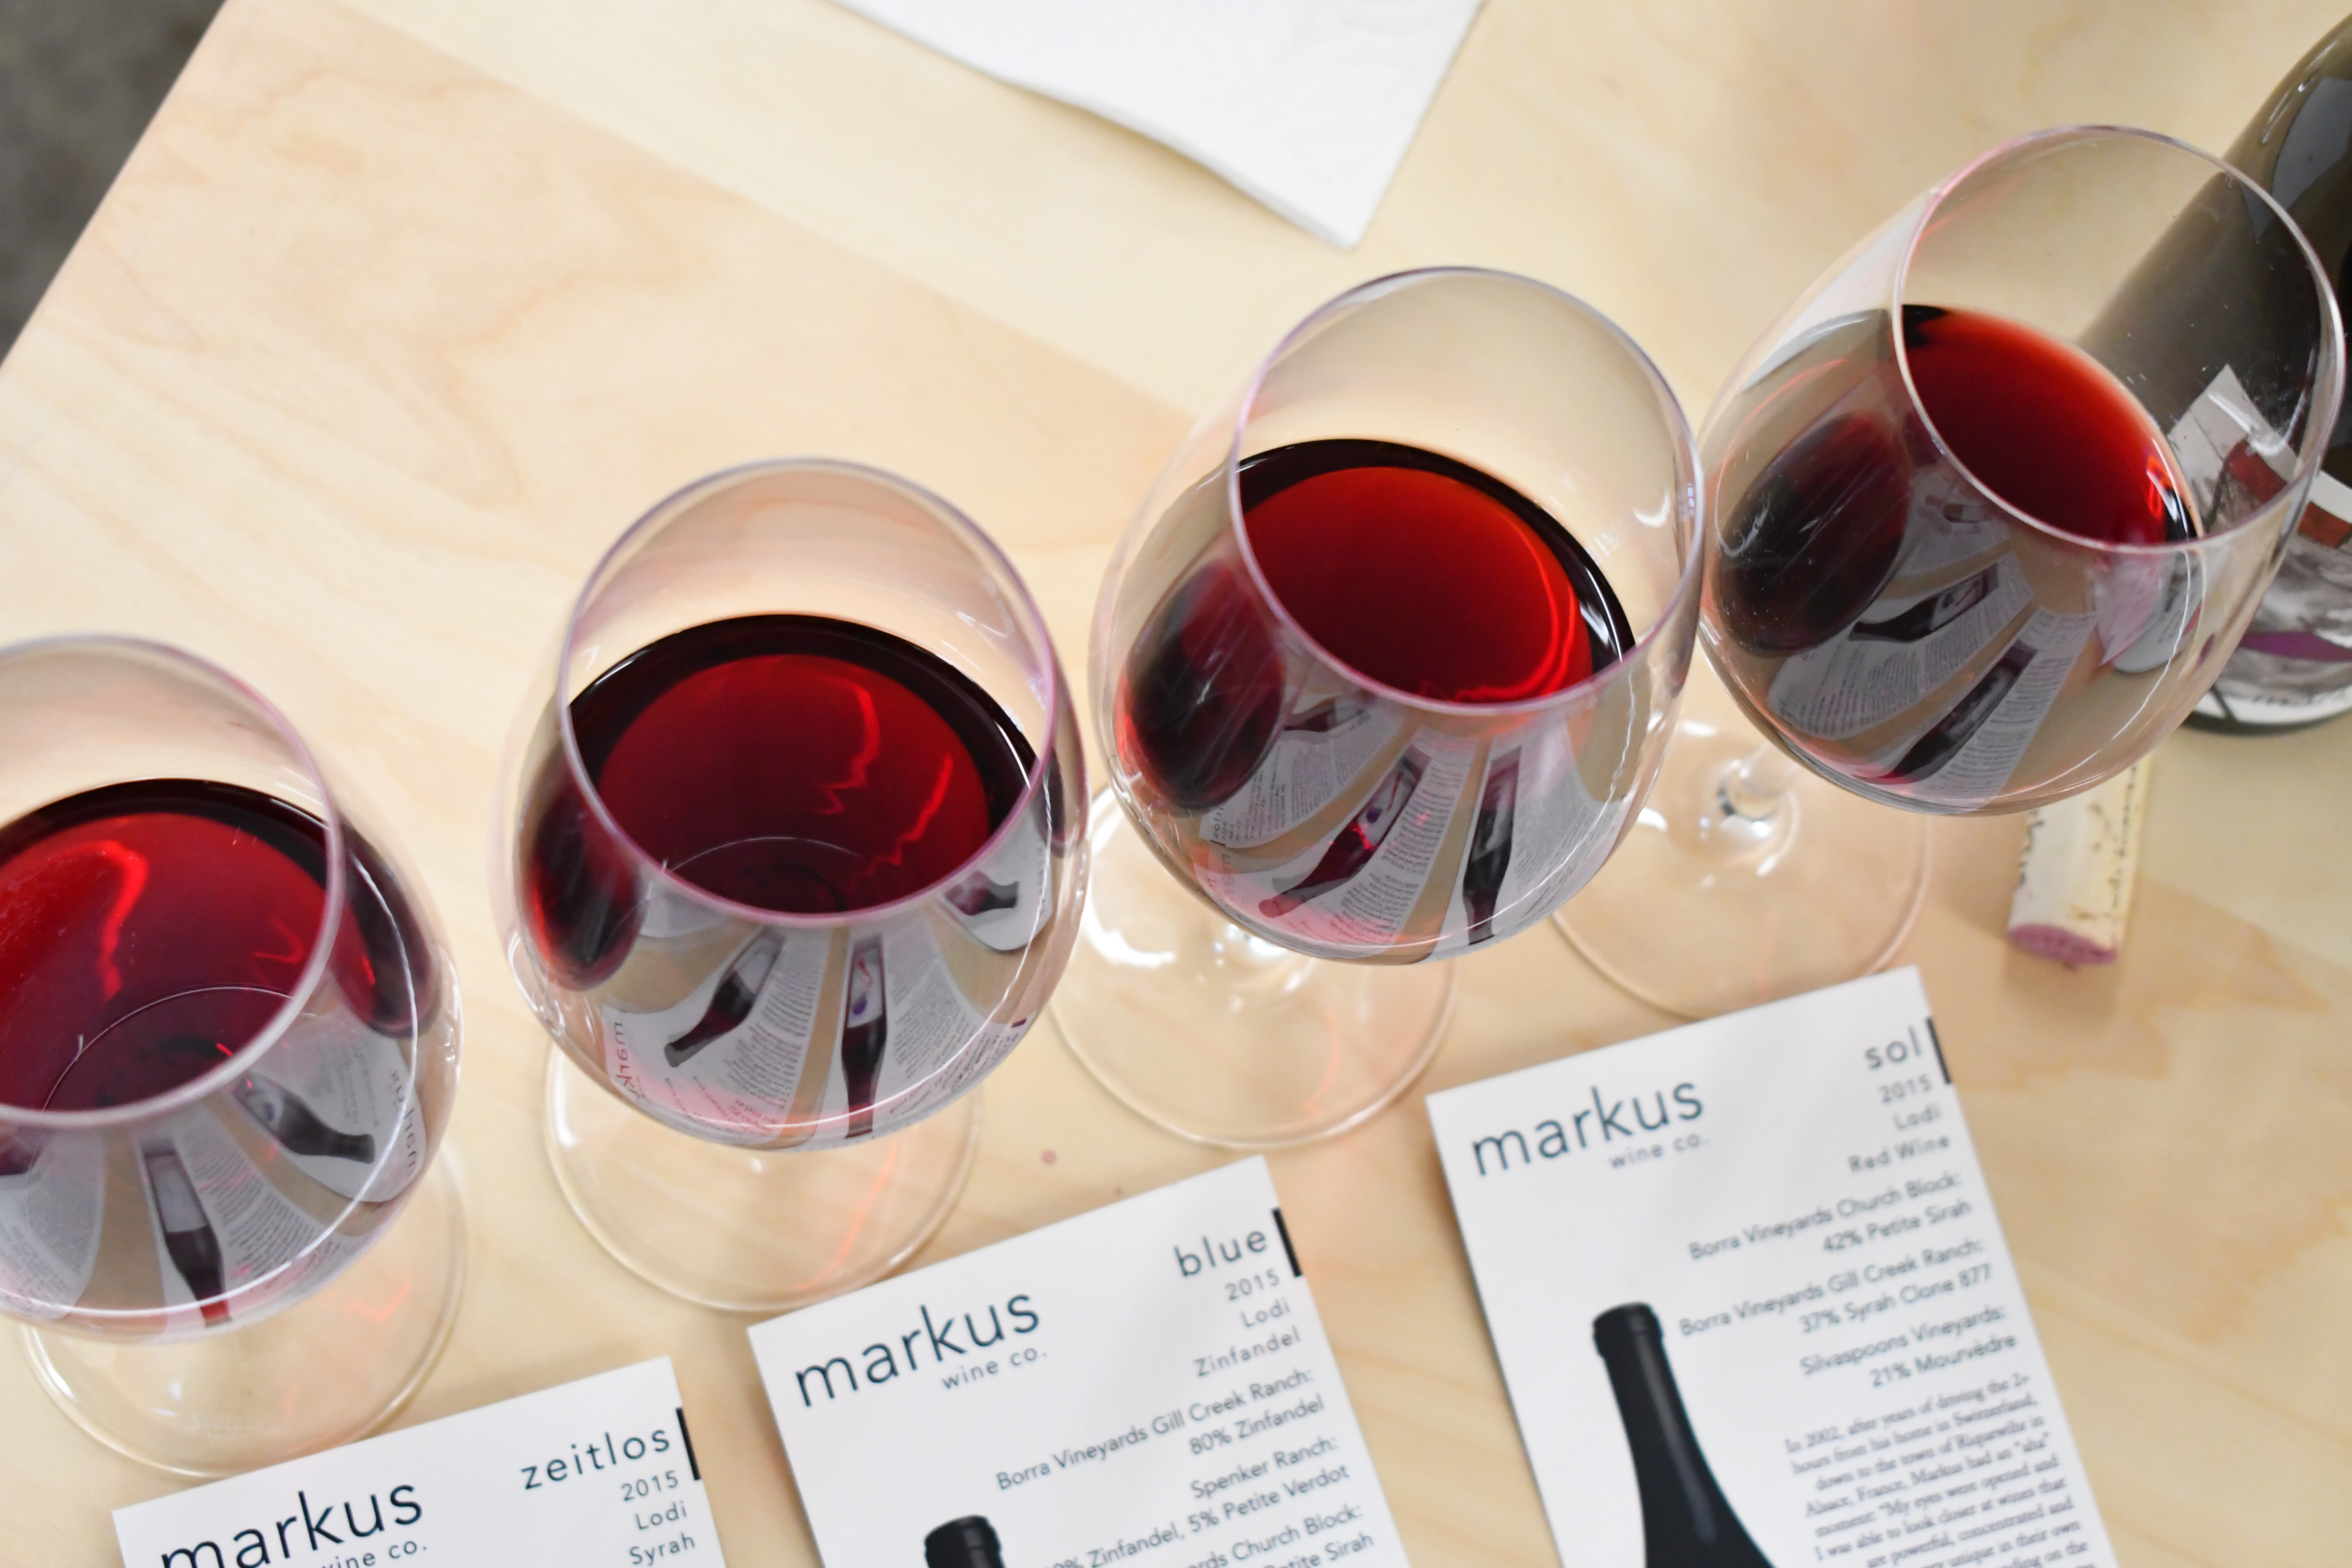 Markus Wine Co. Makes his Mark on Lodi Wine’s Legacy